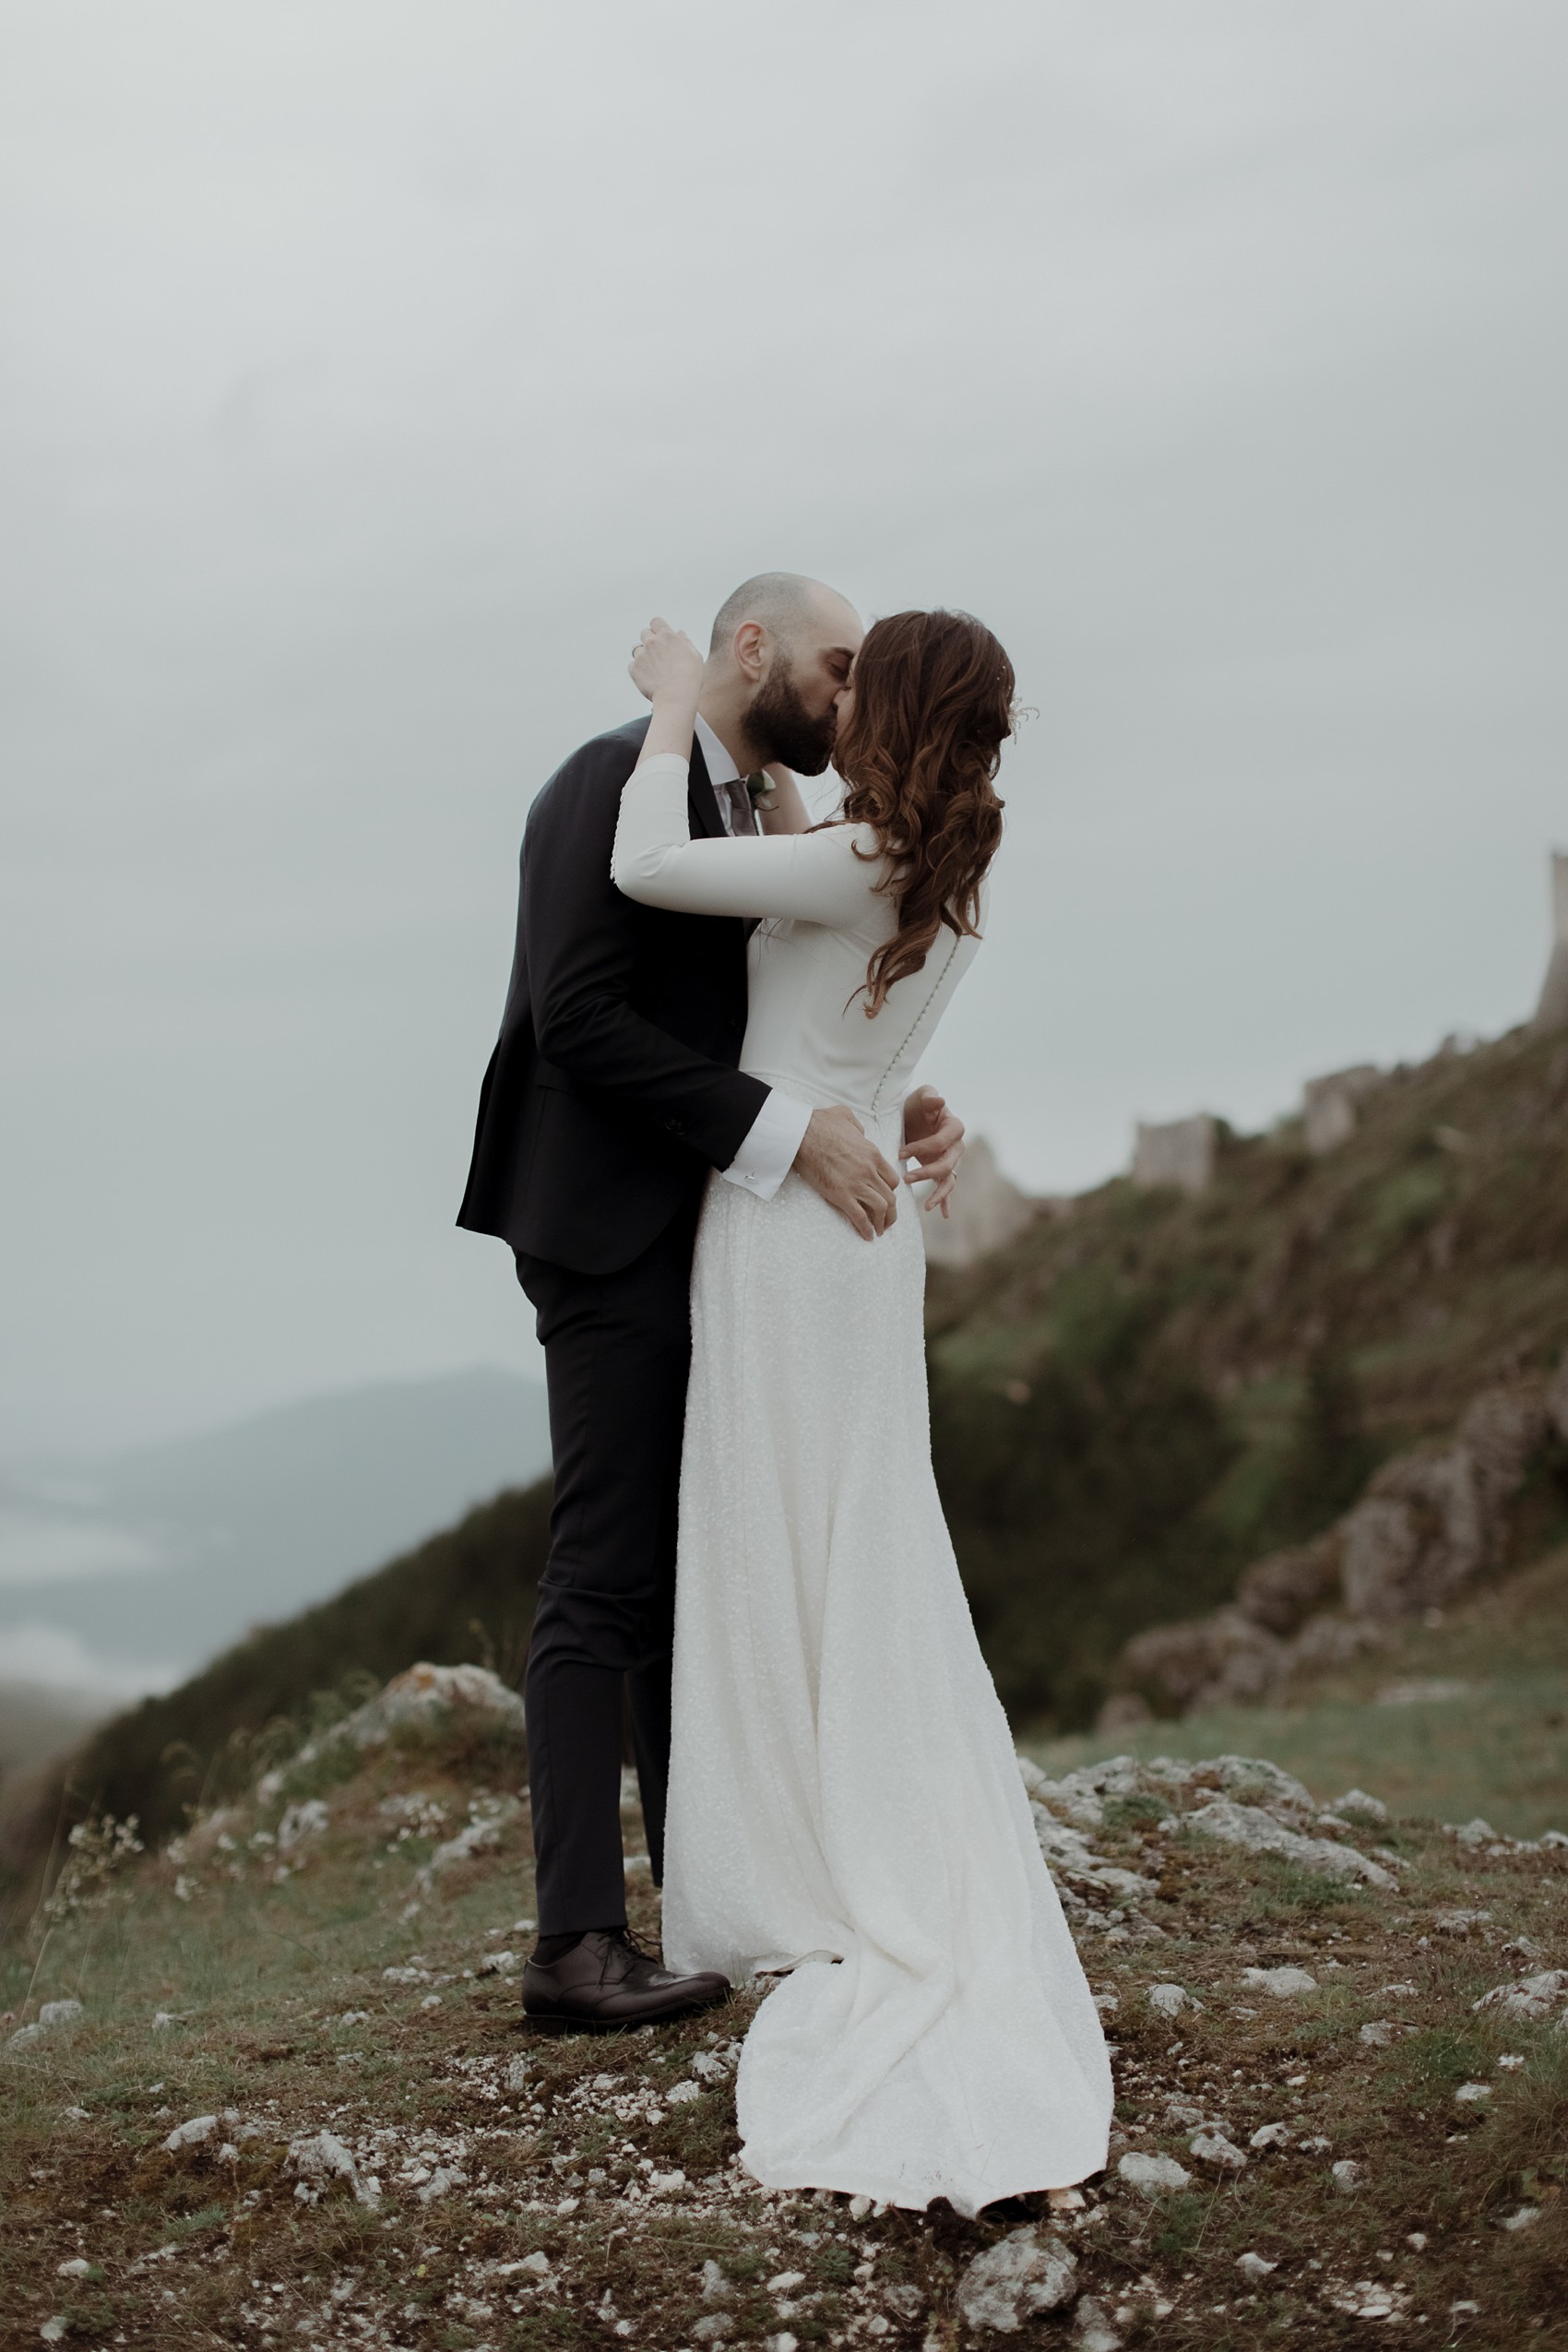 Stylish intimate Italian elopement sequin wedding dress 34 1